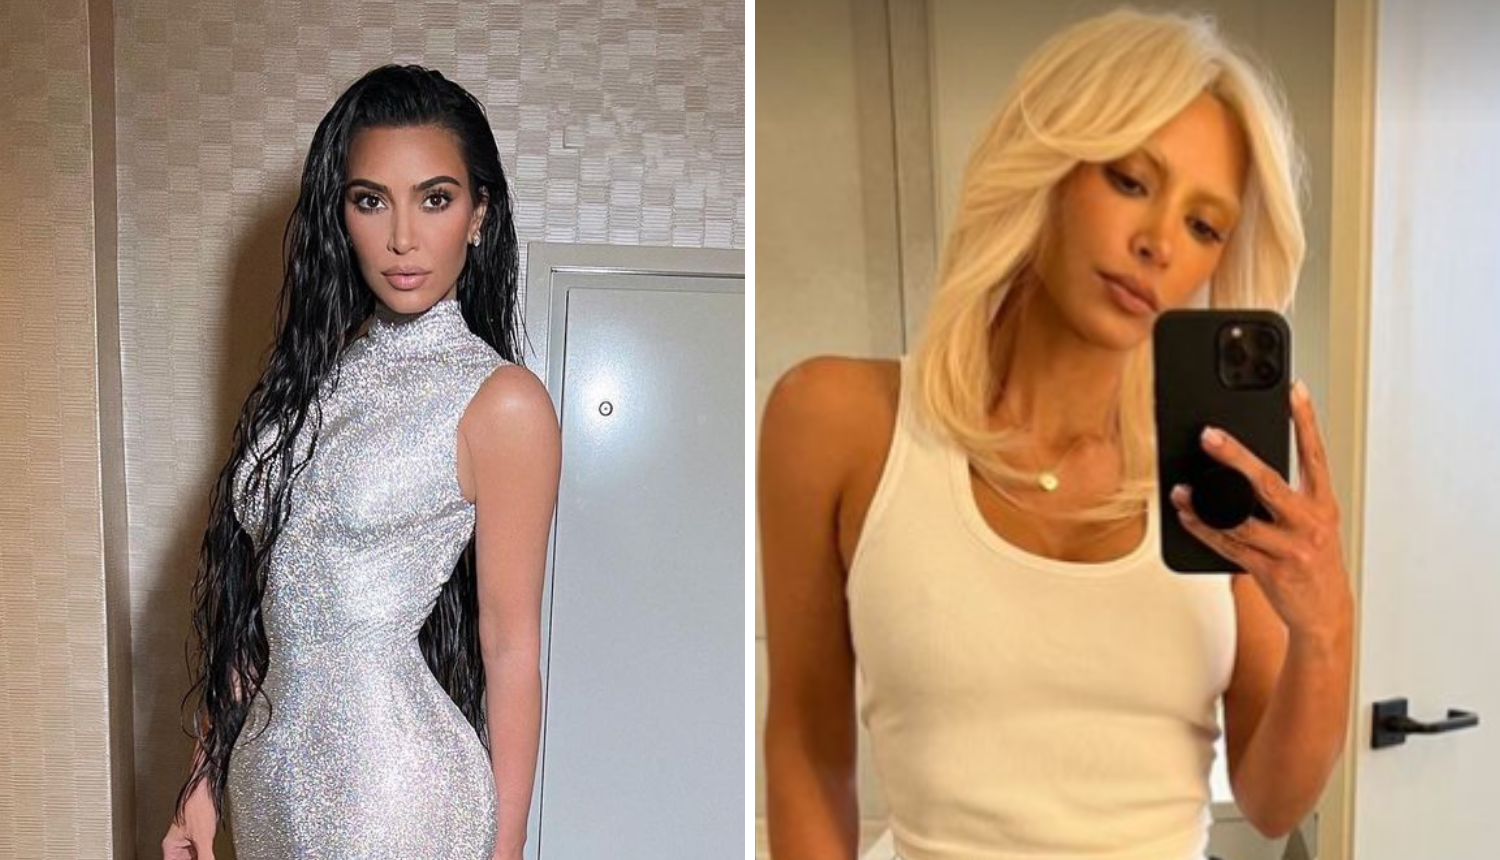 Gologuza Kim Kardashian obrve i kosu obojala u plavo, Vlatka Pokos komentirala: 'Odvratno'